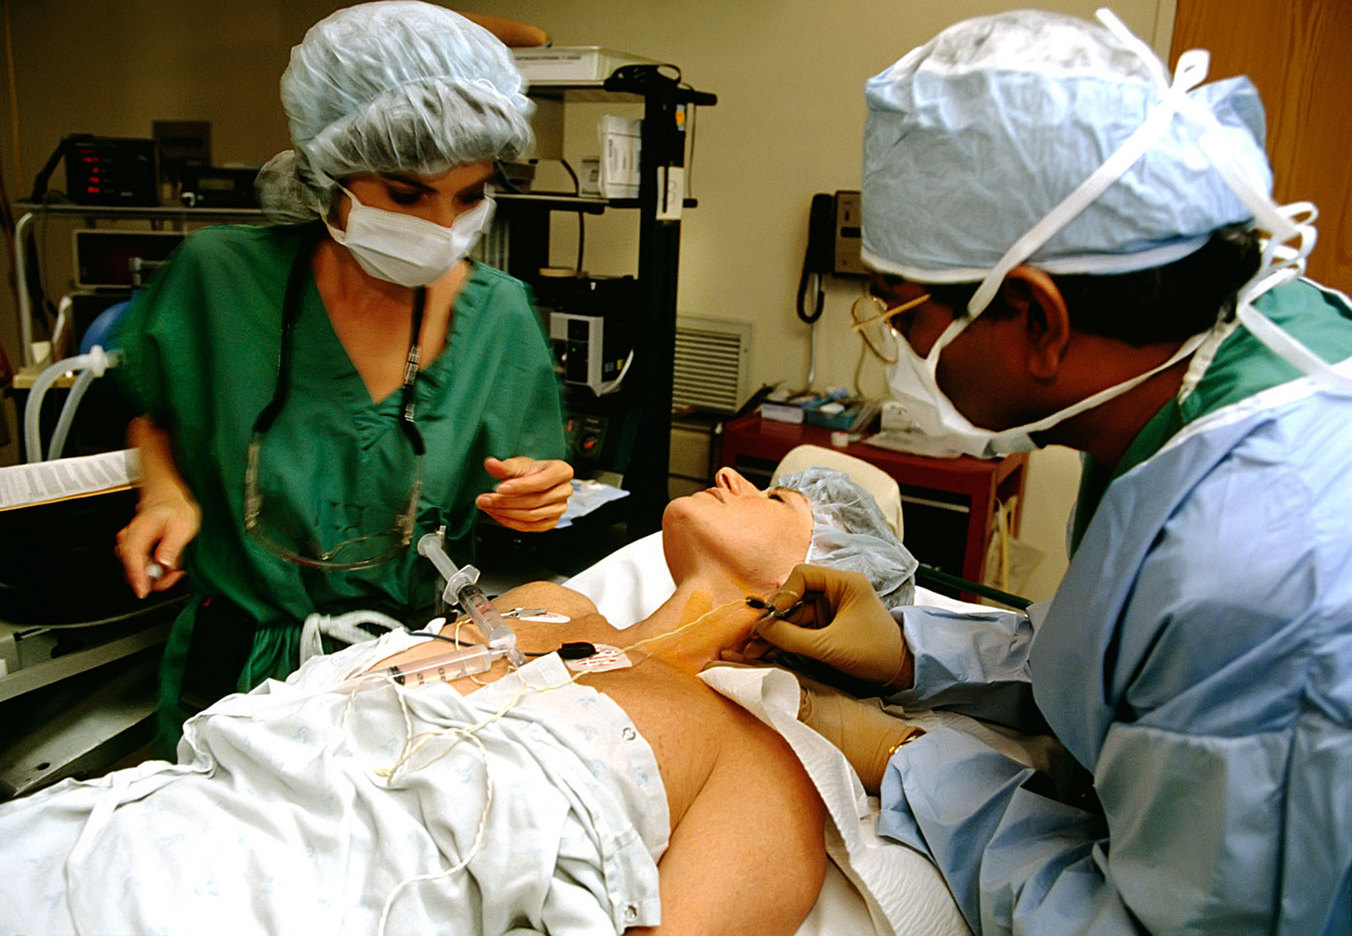 Preparation for an arthroscopic shoulder operation in a New York hospital : HEALTHCARE & MEDICAL : Viviane Moos |  Documentary Photographer